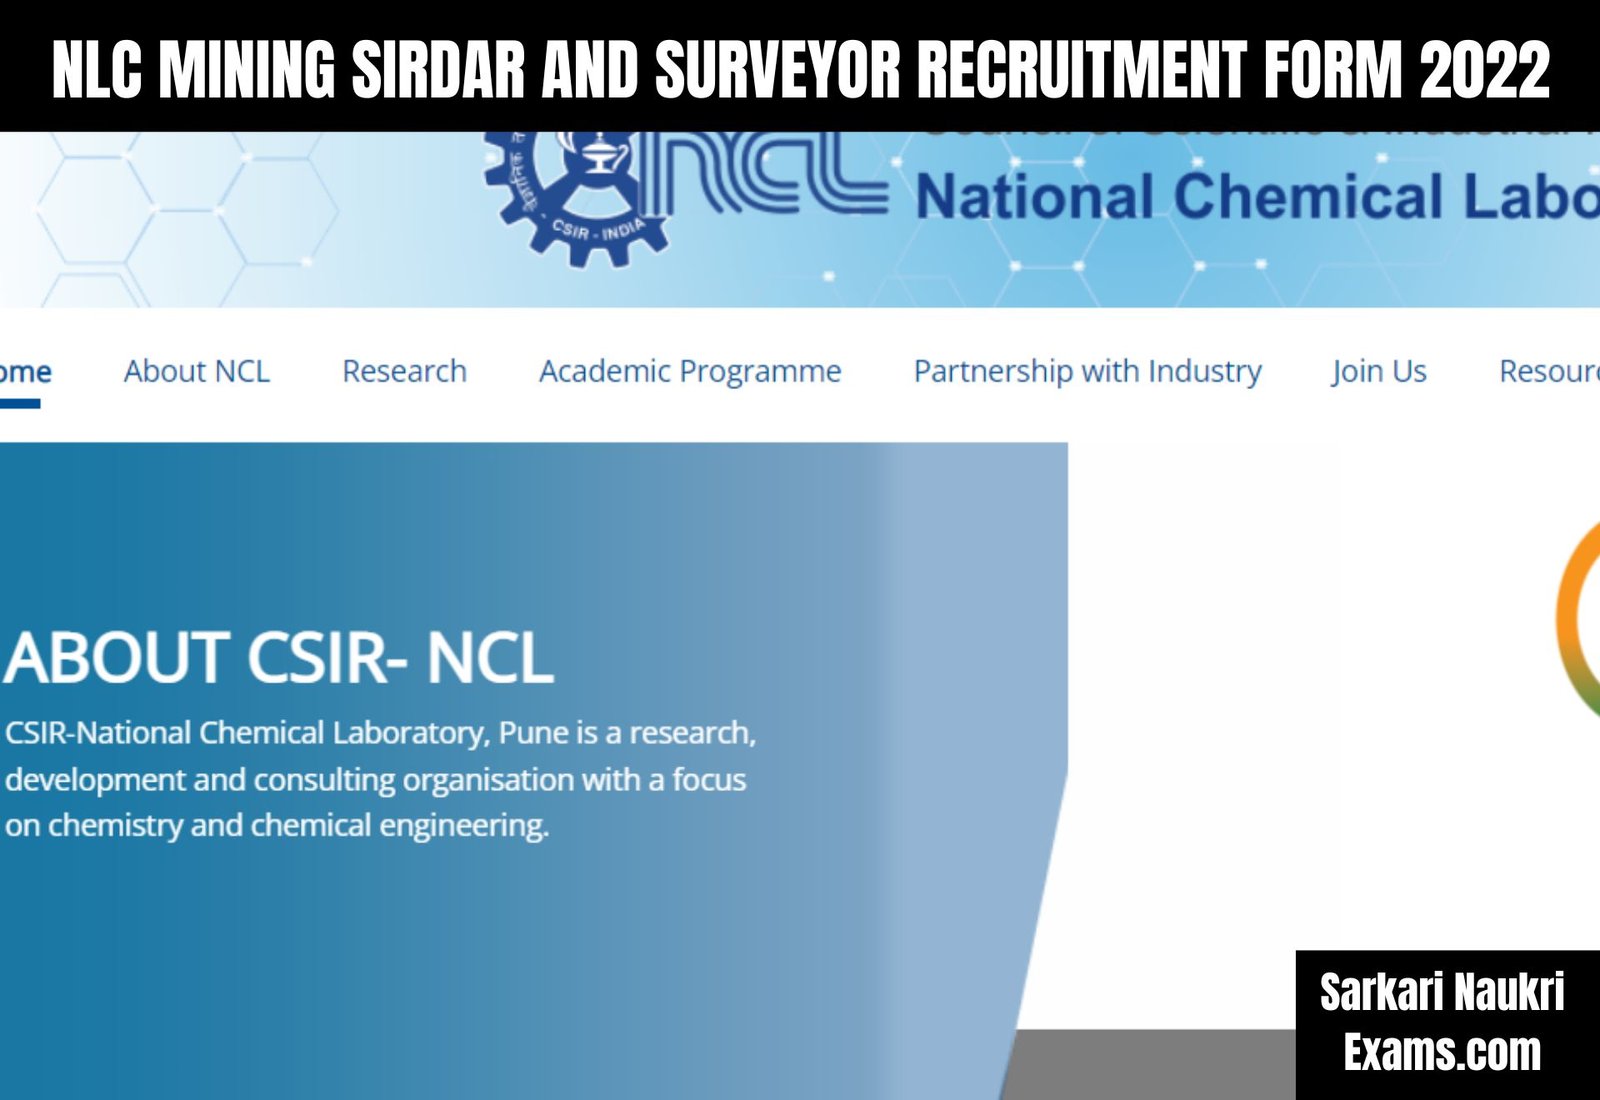 National Chemical Laboratory(NLC) Mining Sirdar and Surveyor Recruitment Form 2022